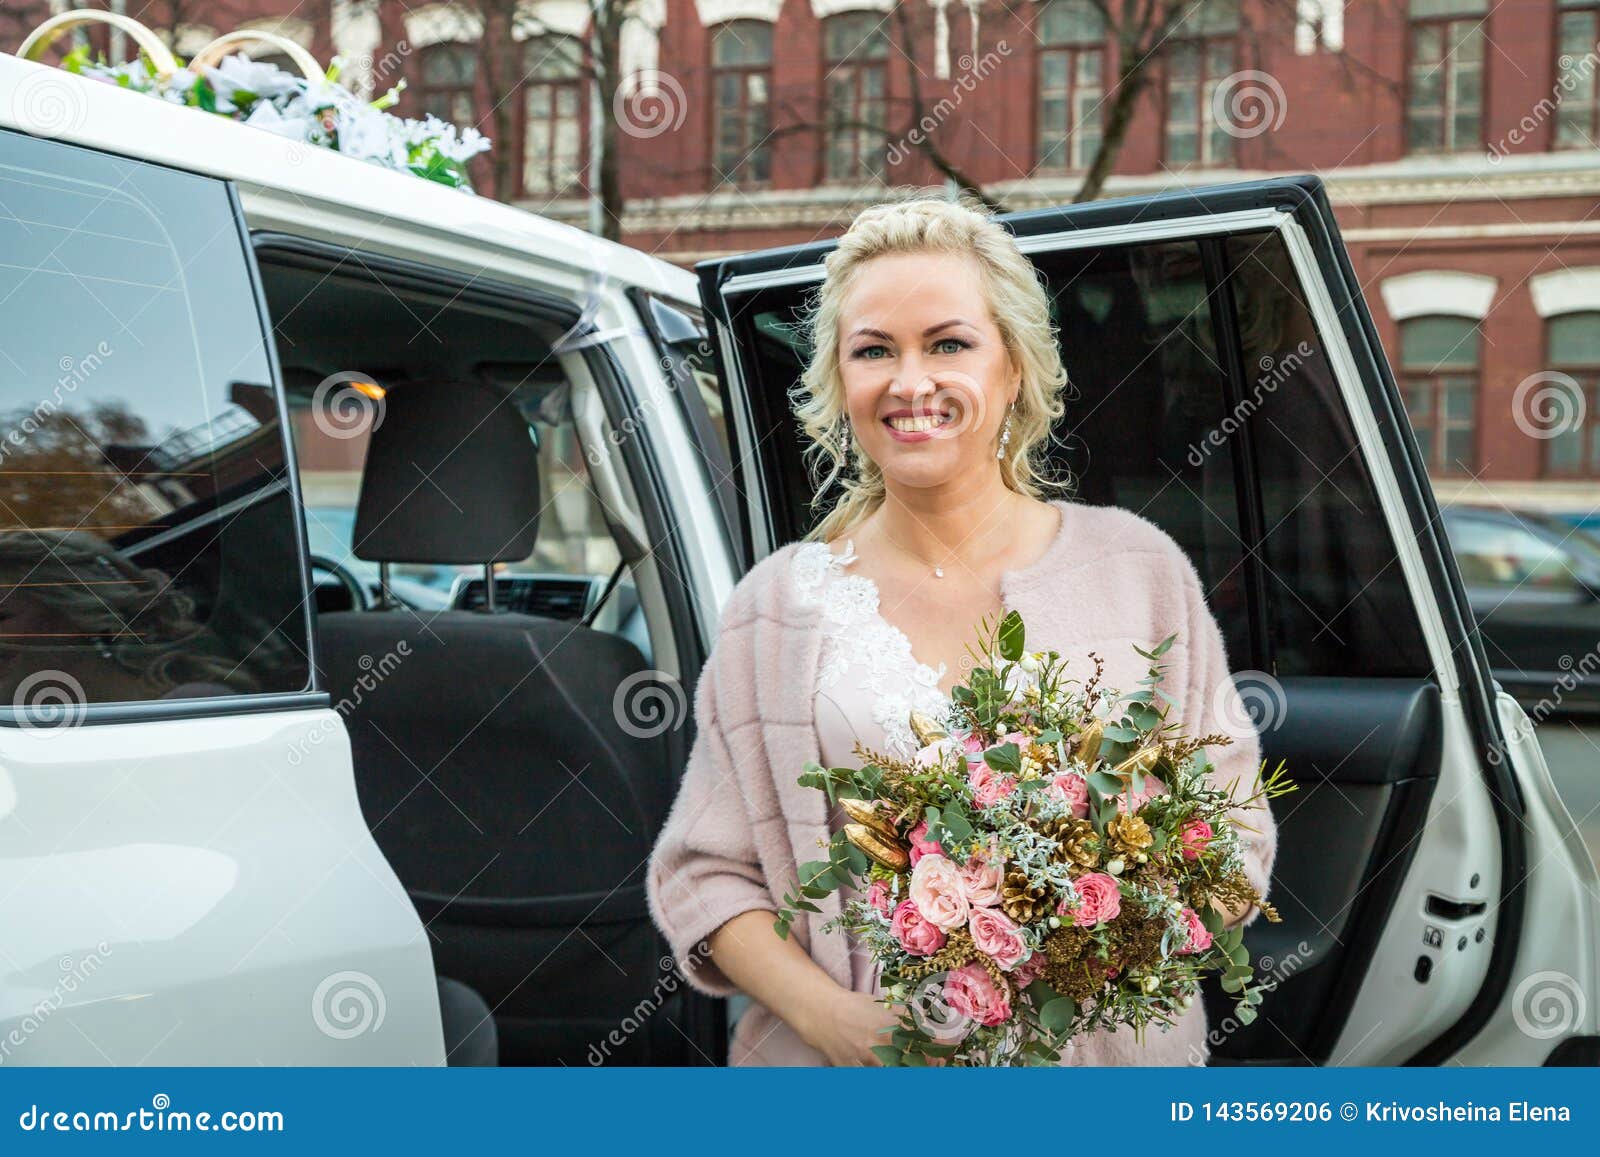 https://thumbs.dreamstime.com/z/beautiful-russian-bride-car-city-day-beautiful-russian-bride-car-city-143569206.jpg